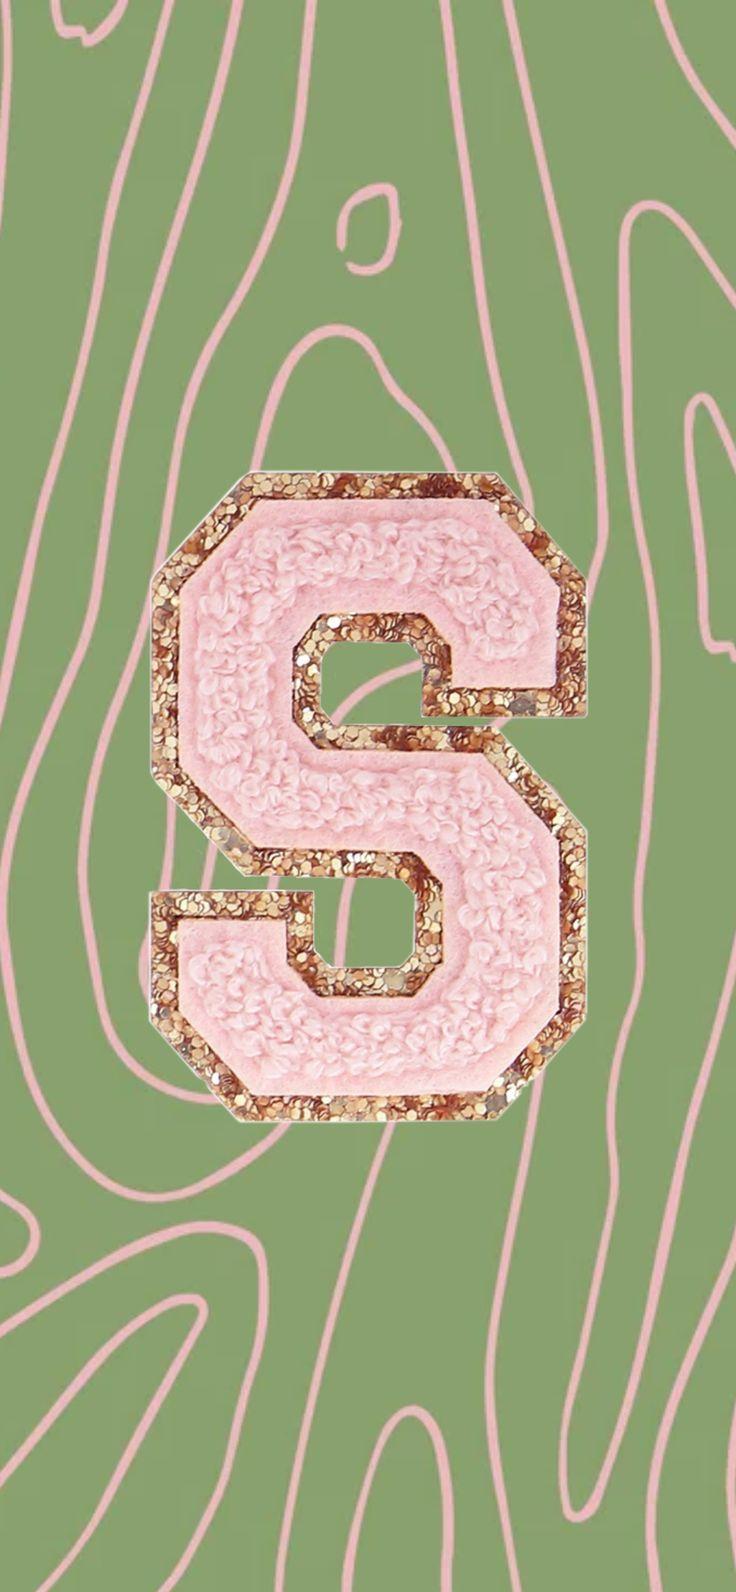 Stoney Clover Lane Sage Green Pink S Letter iPhone Wallpaper